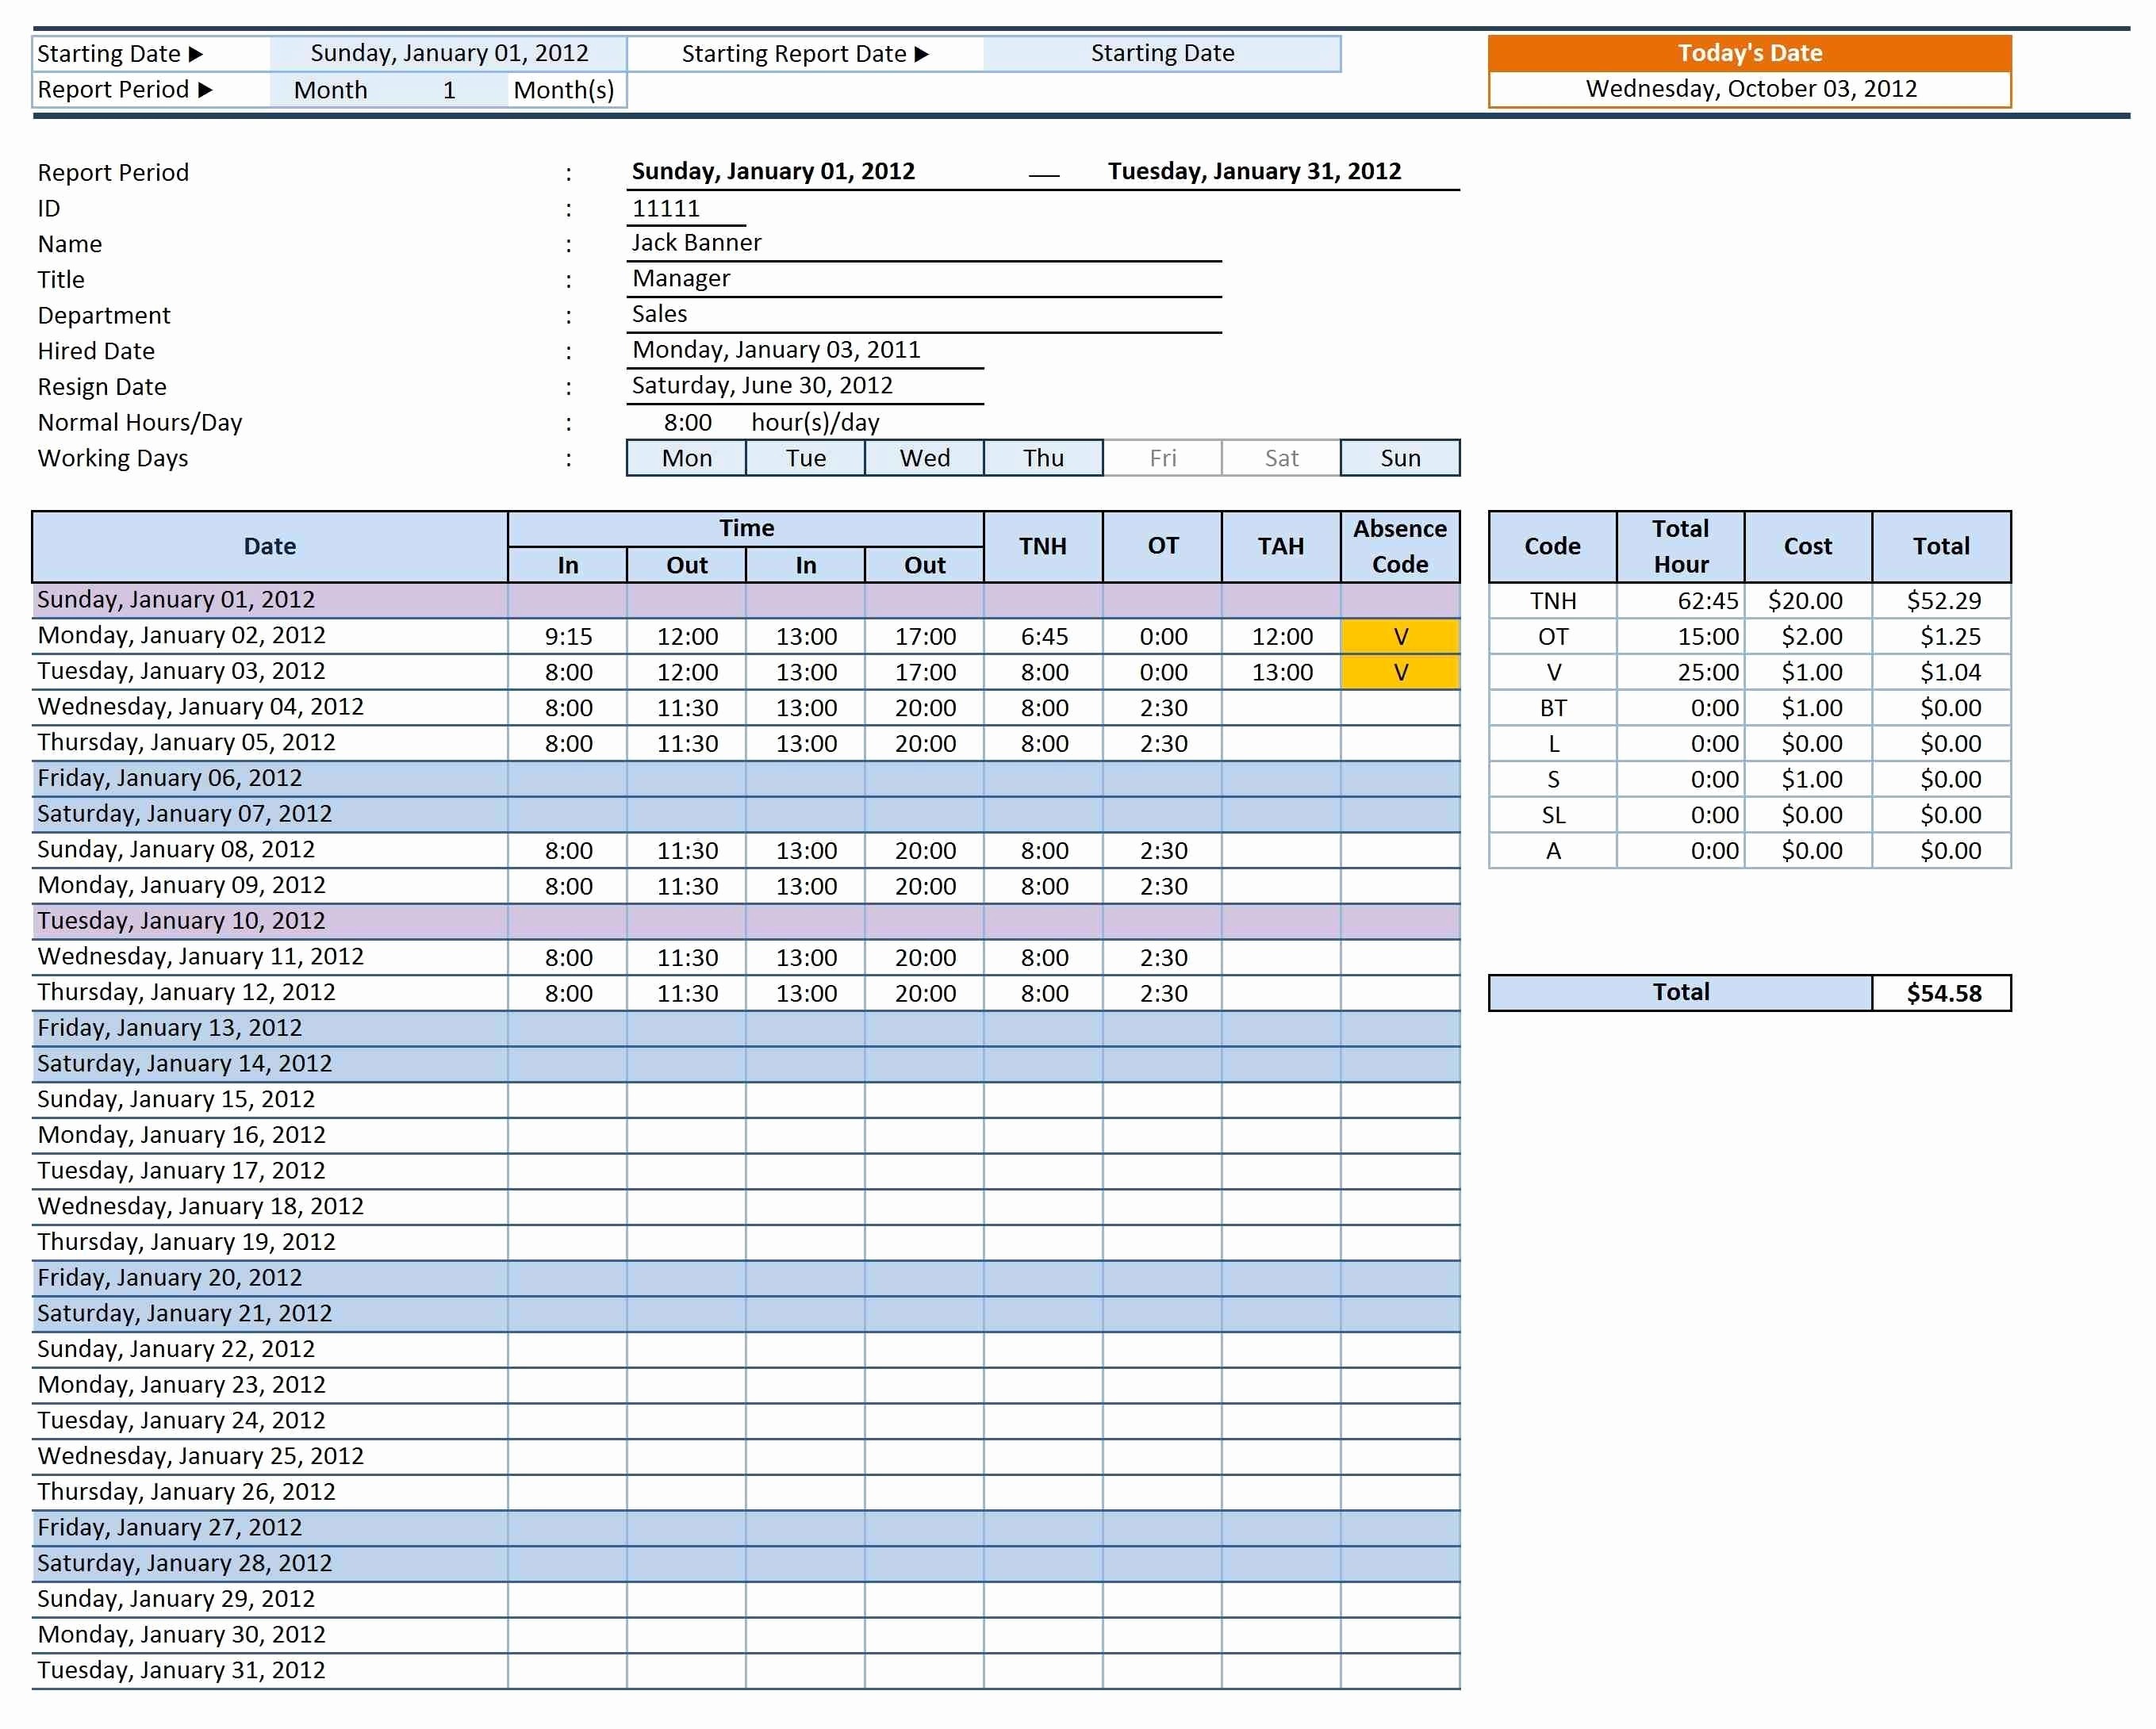 Intermittent Fmla Tracking Spreadsheet New Time Document